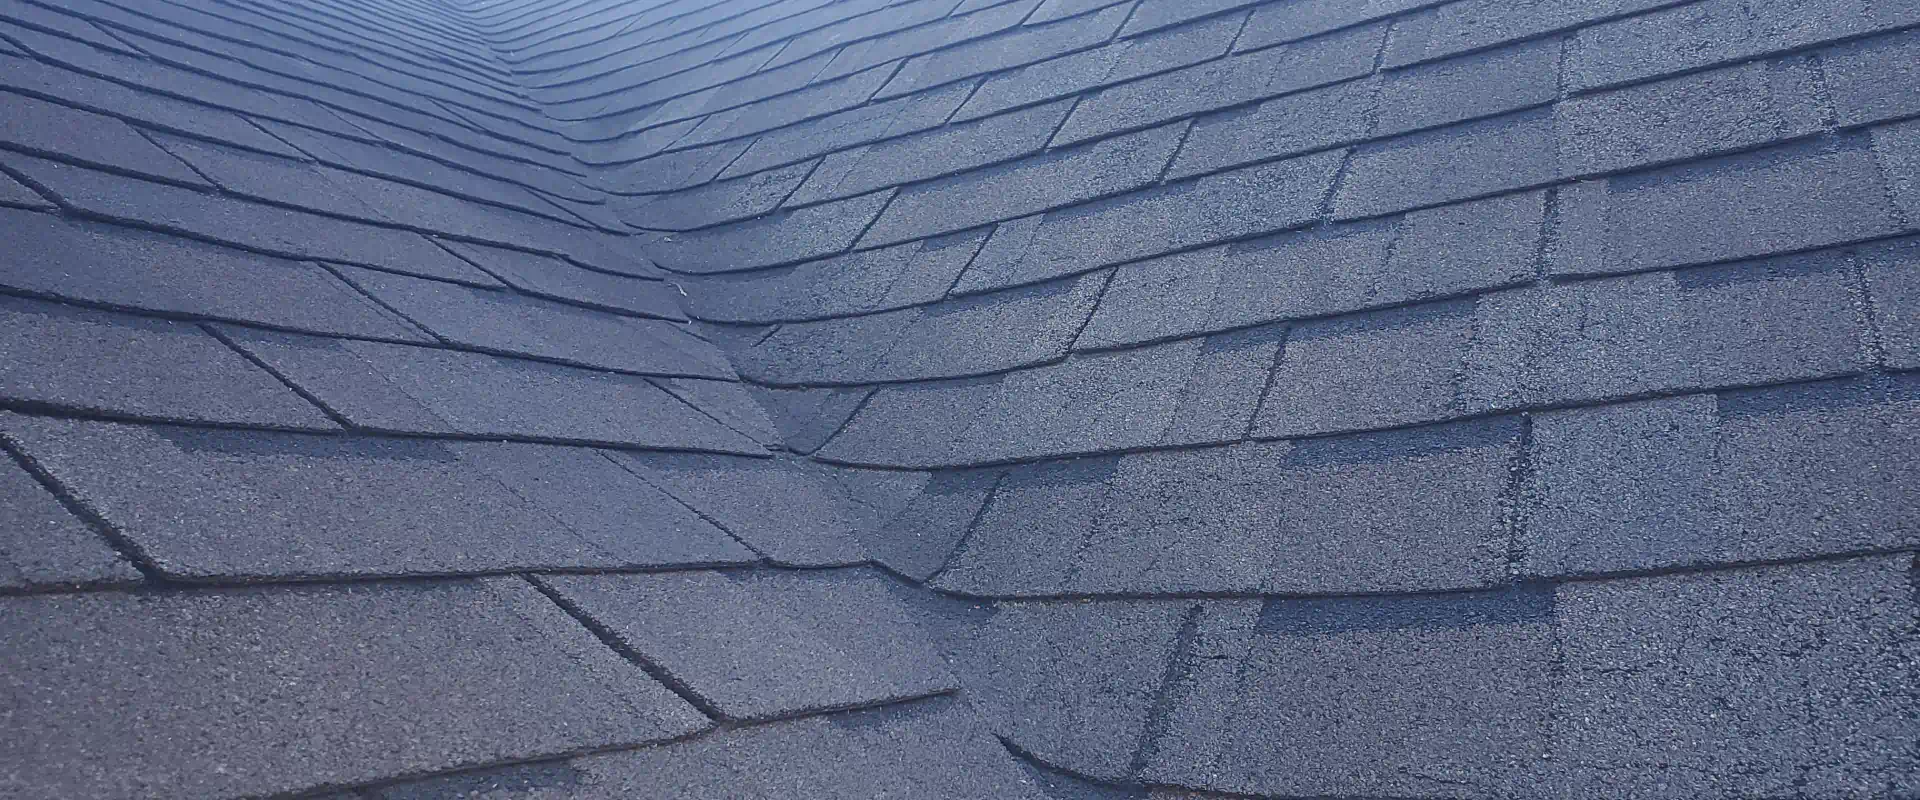 asphalt roofing tile closeup